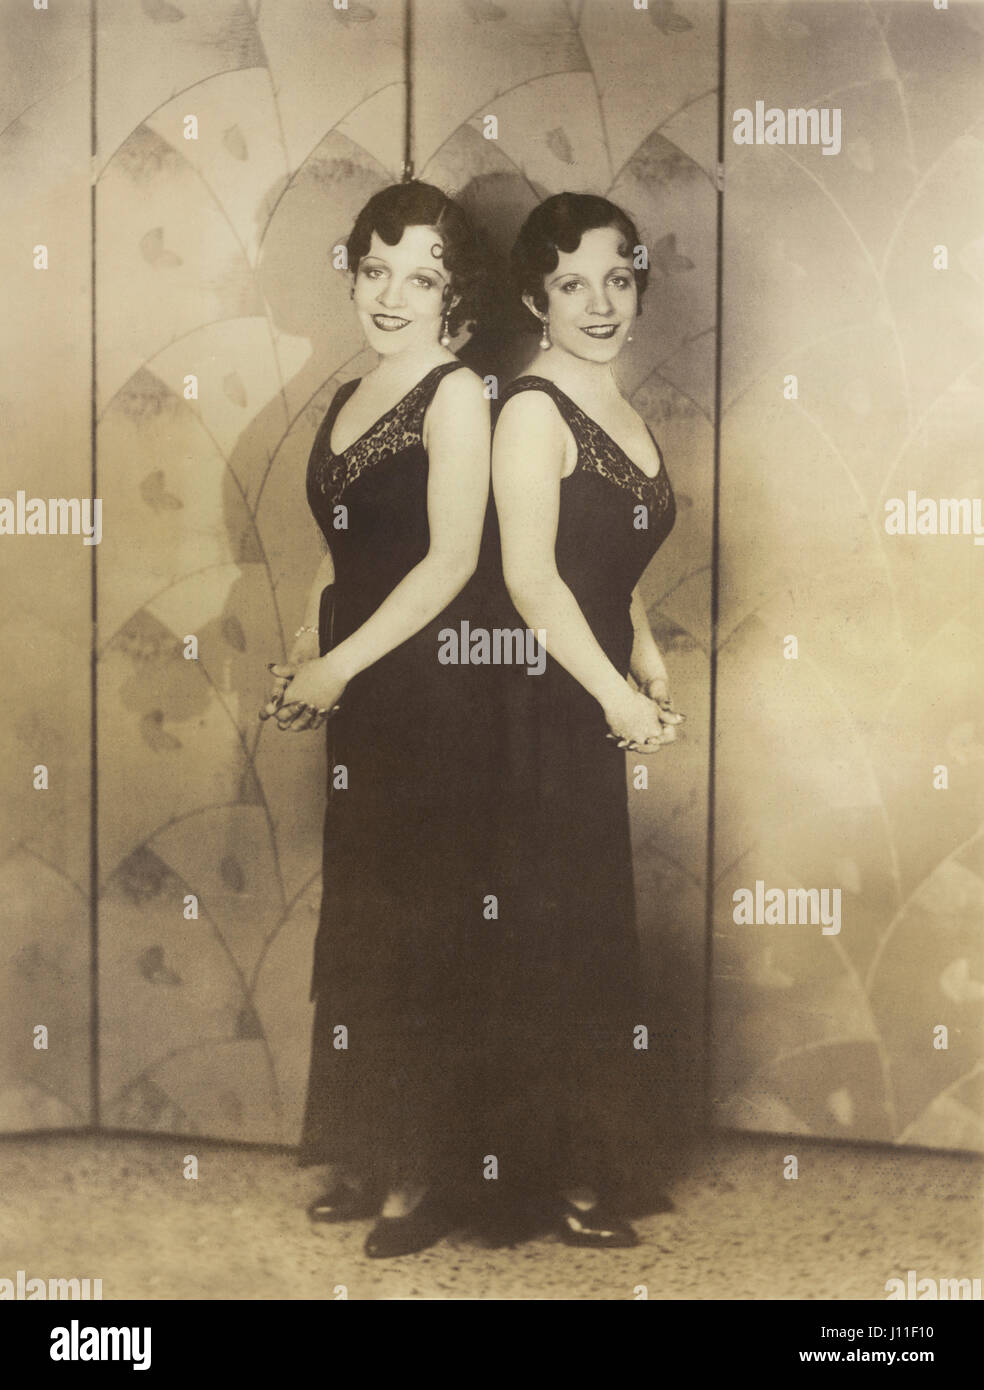 Hilton Twins, Daisy and Violet, Portrait, 1932 Stock Photo